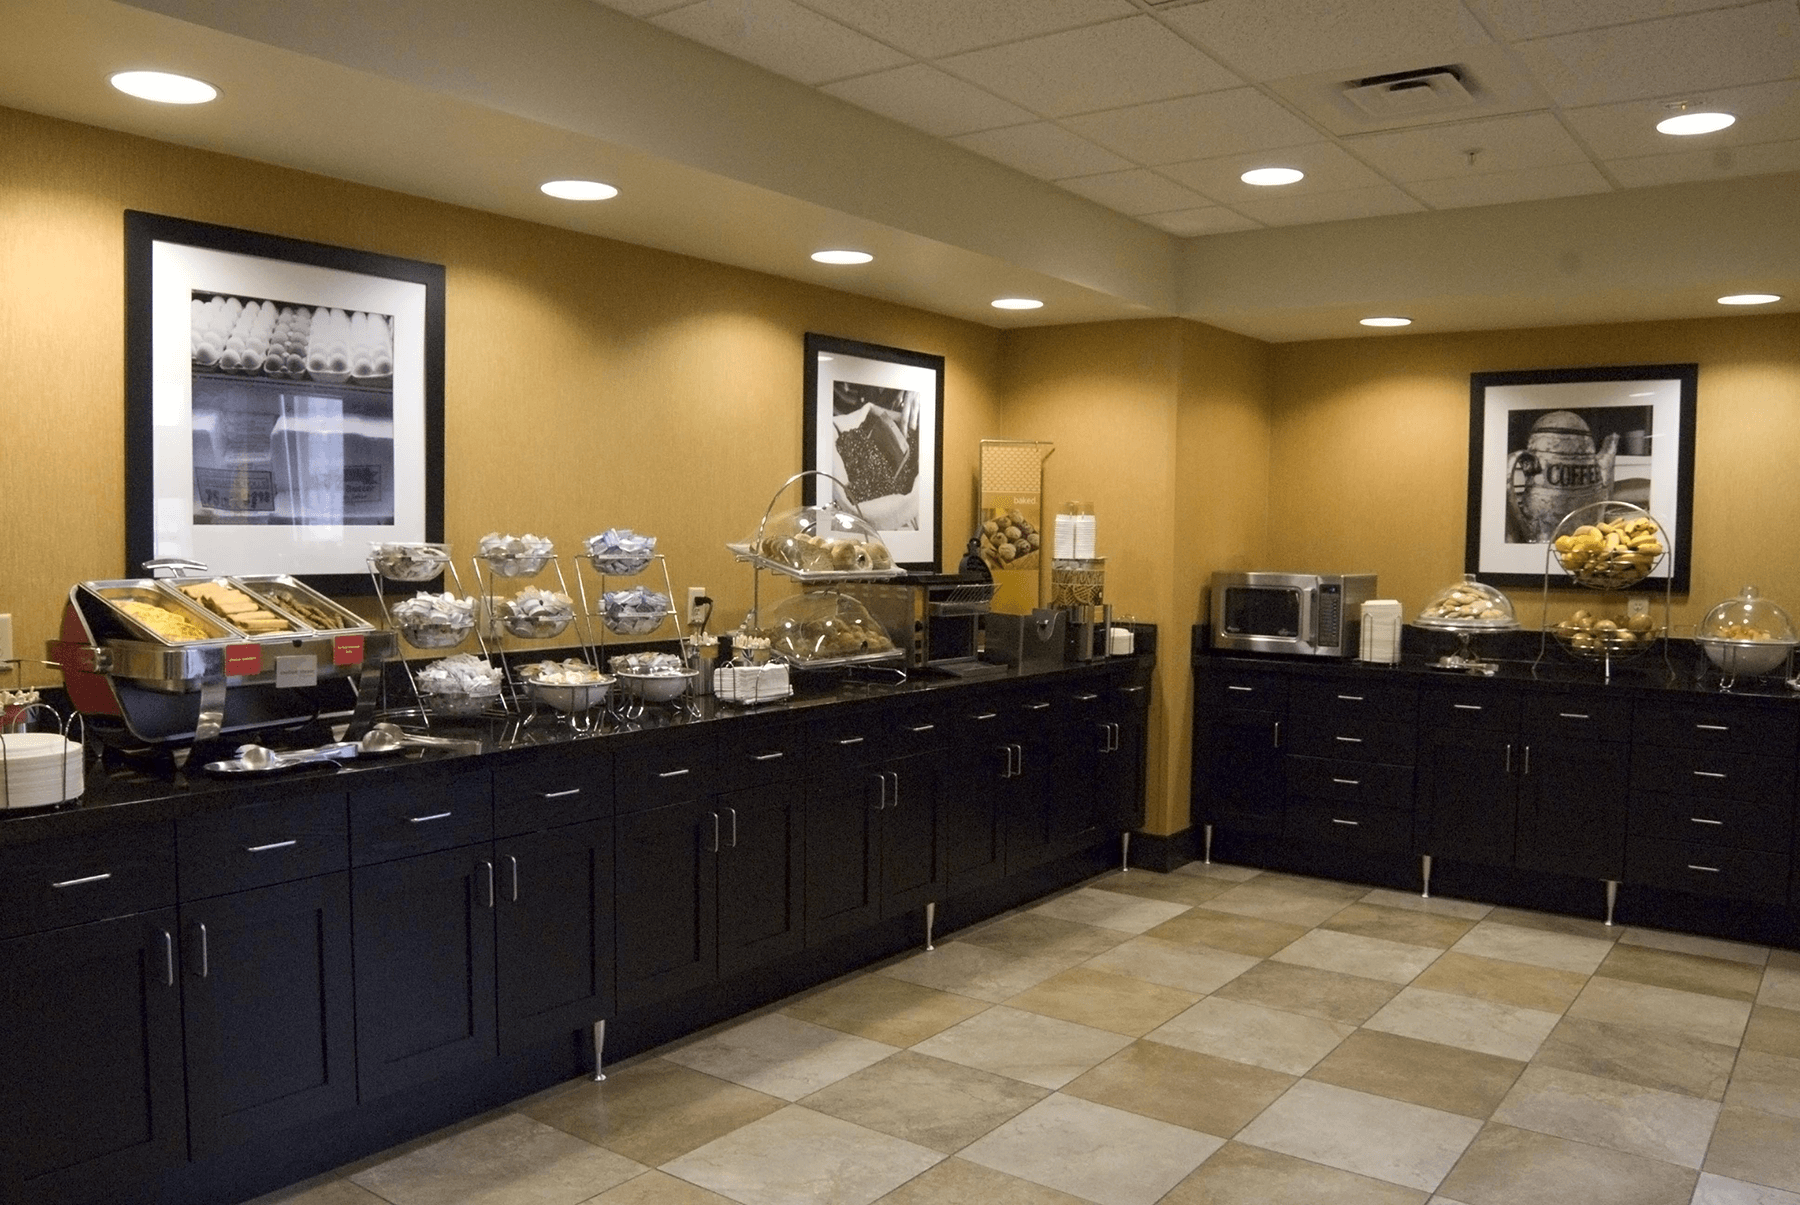  Hampton Inn and Suites Spokane complimentary breakfast room interior 